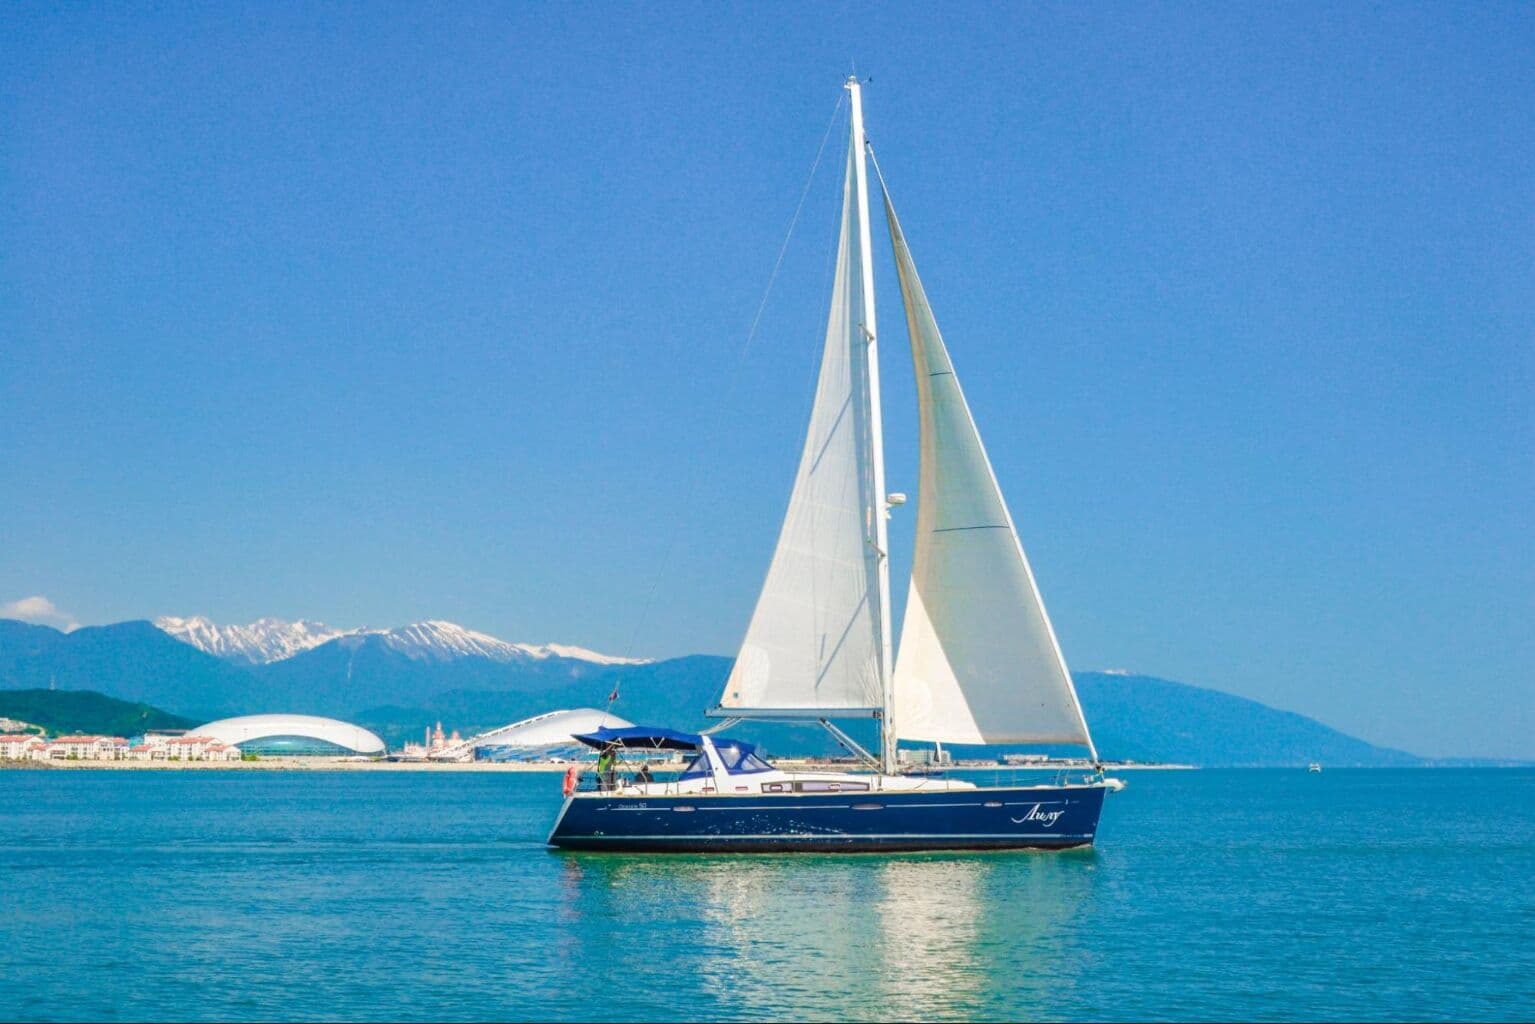 Красивое парусное судно в Черном море на фоне олимпийских объектов